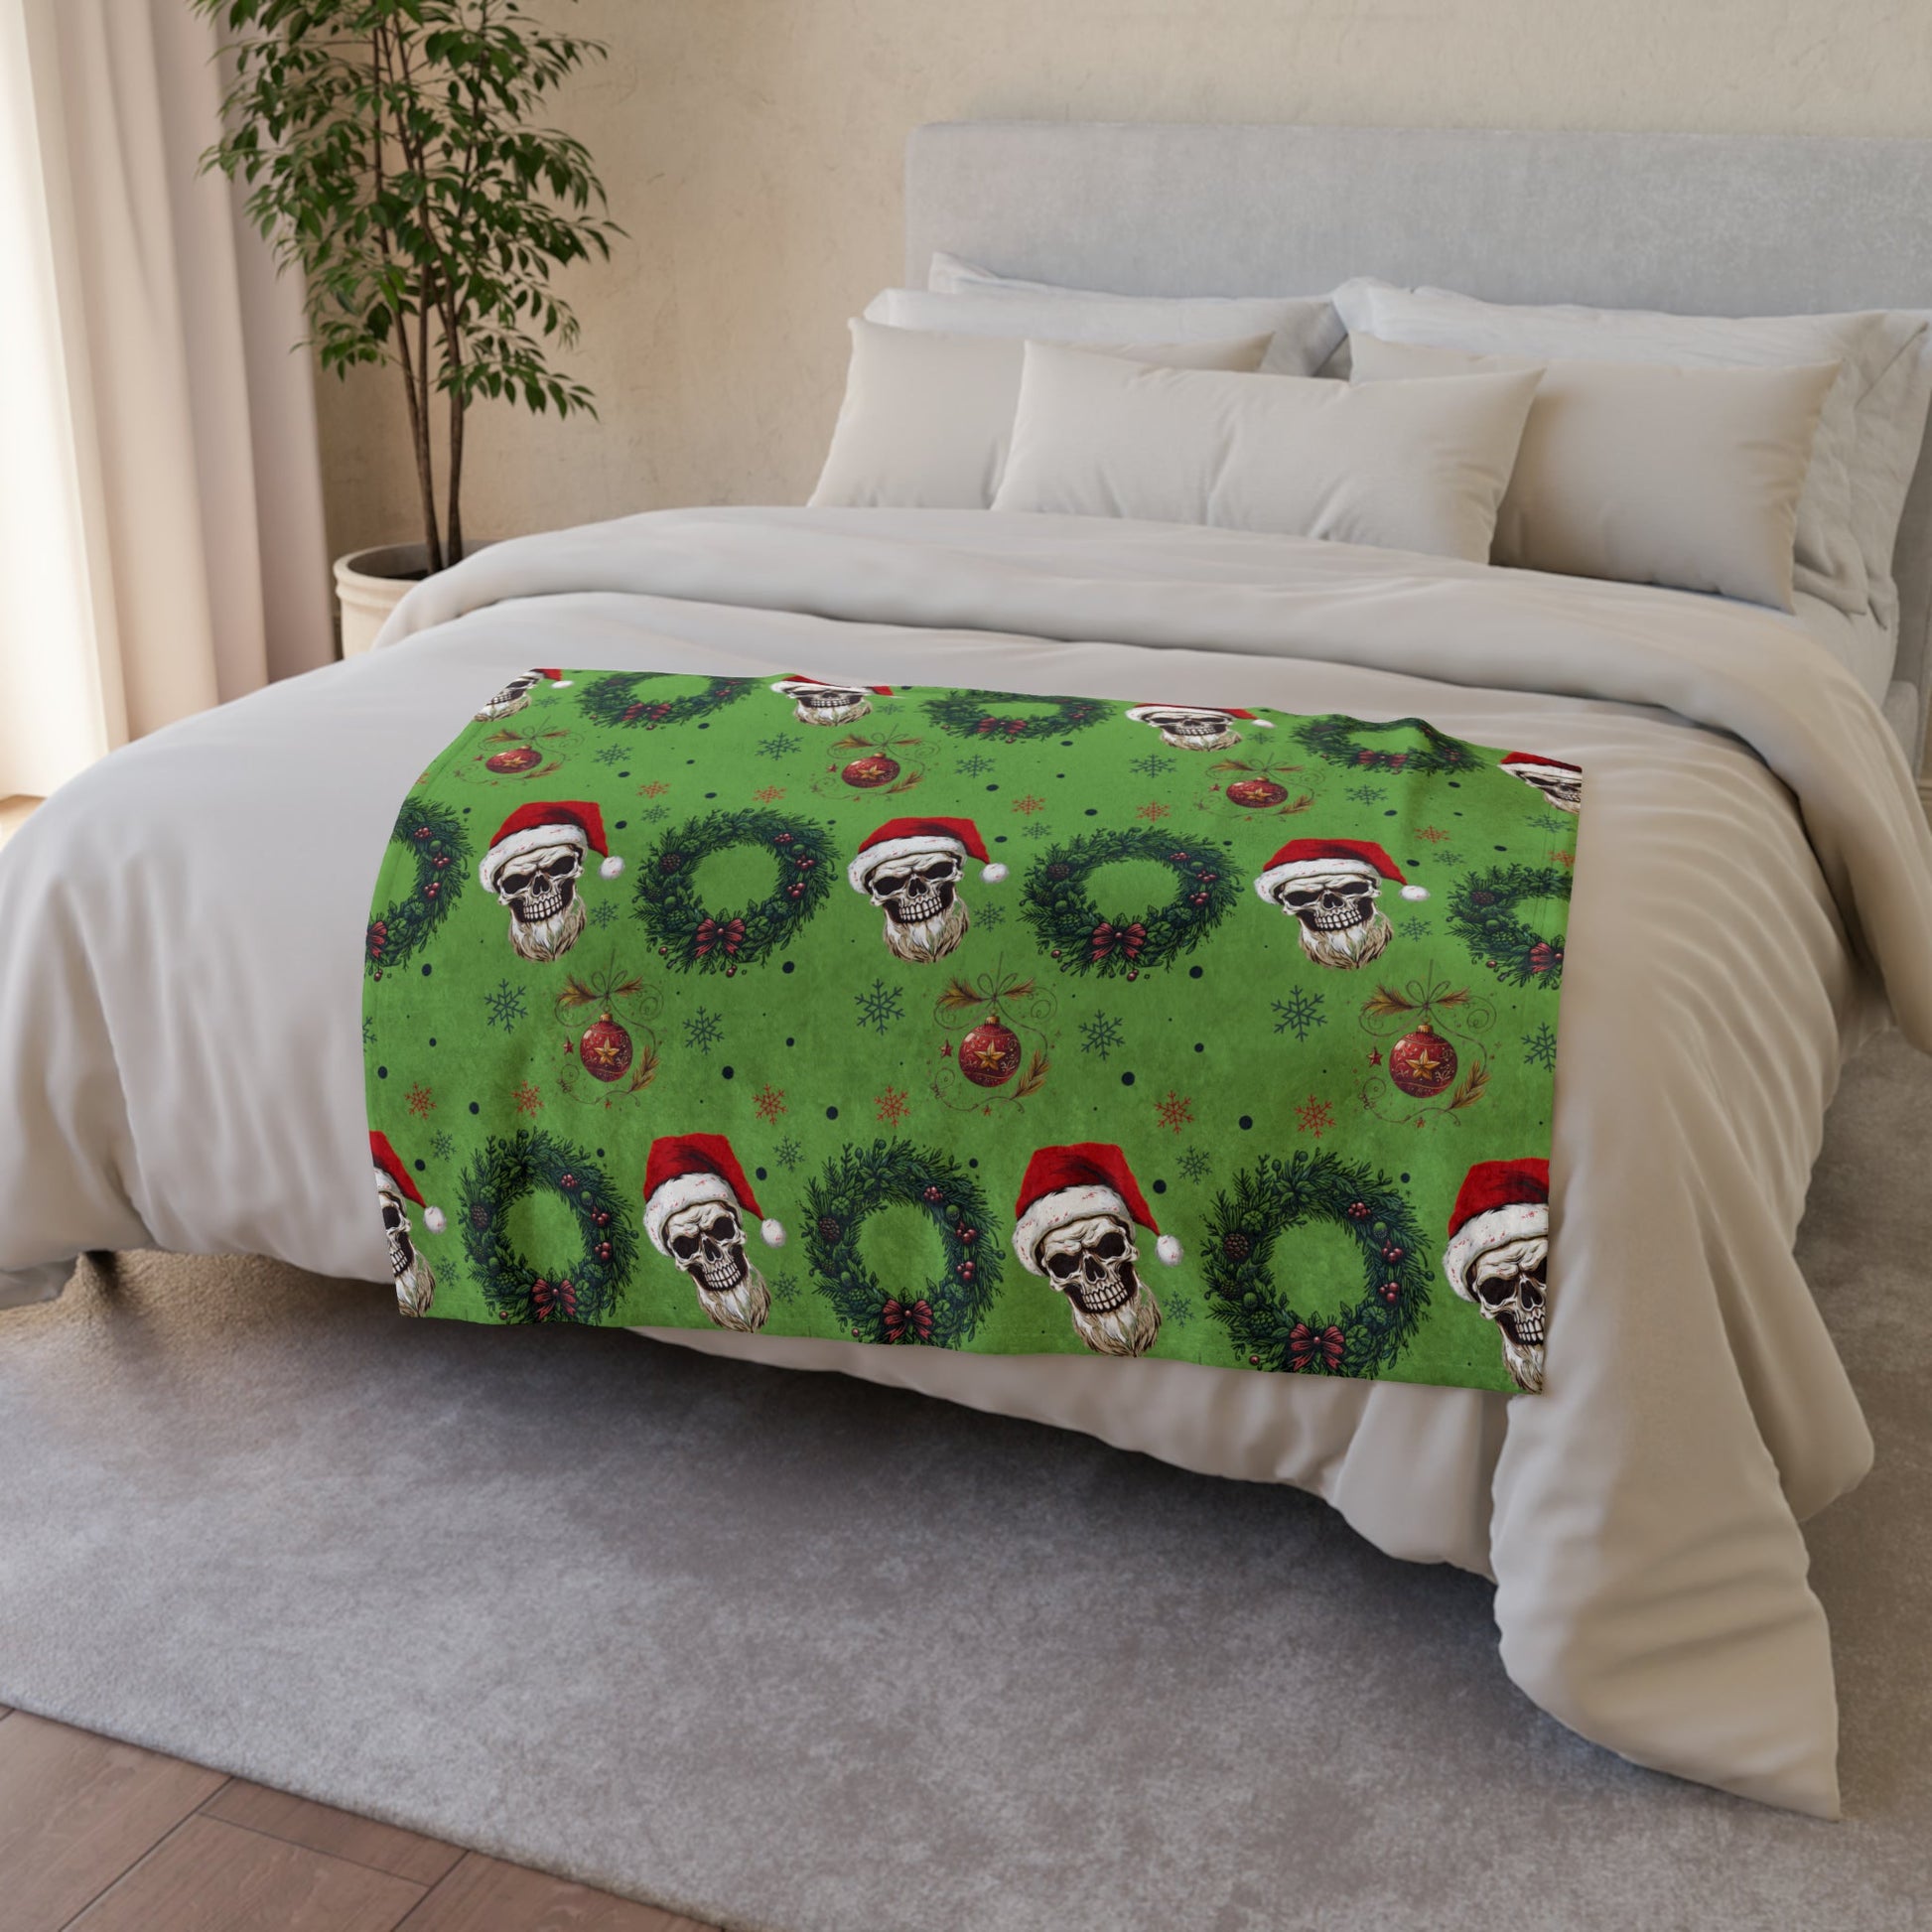 Skeleton Santa BlanketHome DecorVTZdesigns30'' × 40''BedBeddingblanket